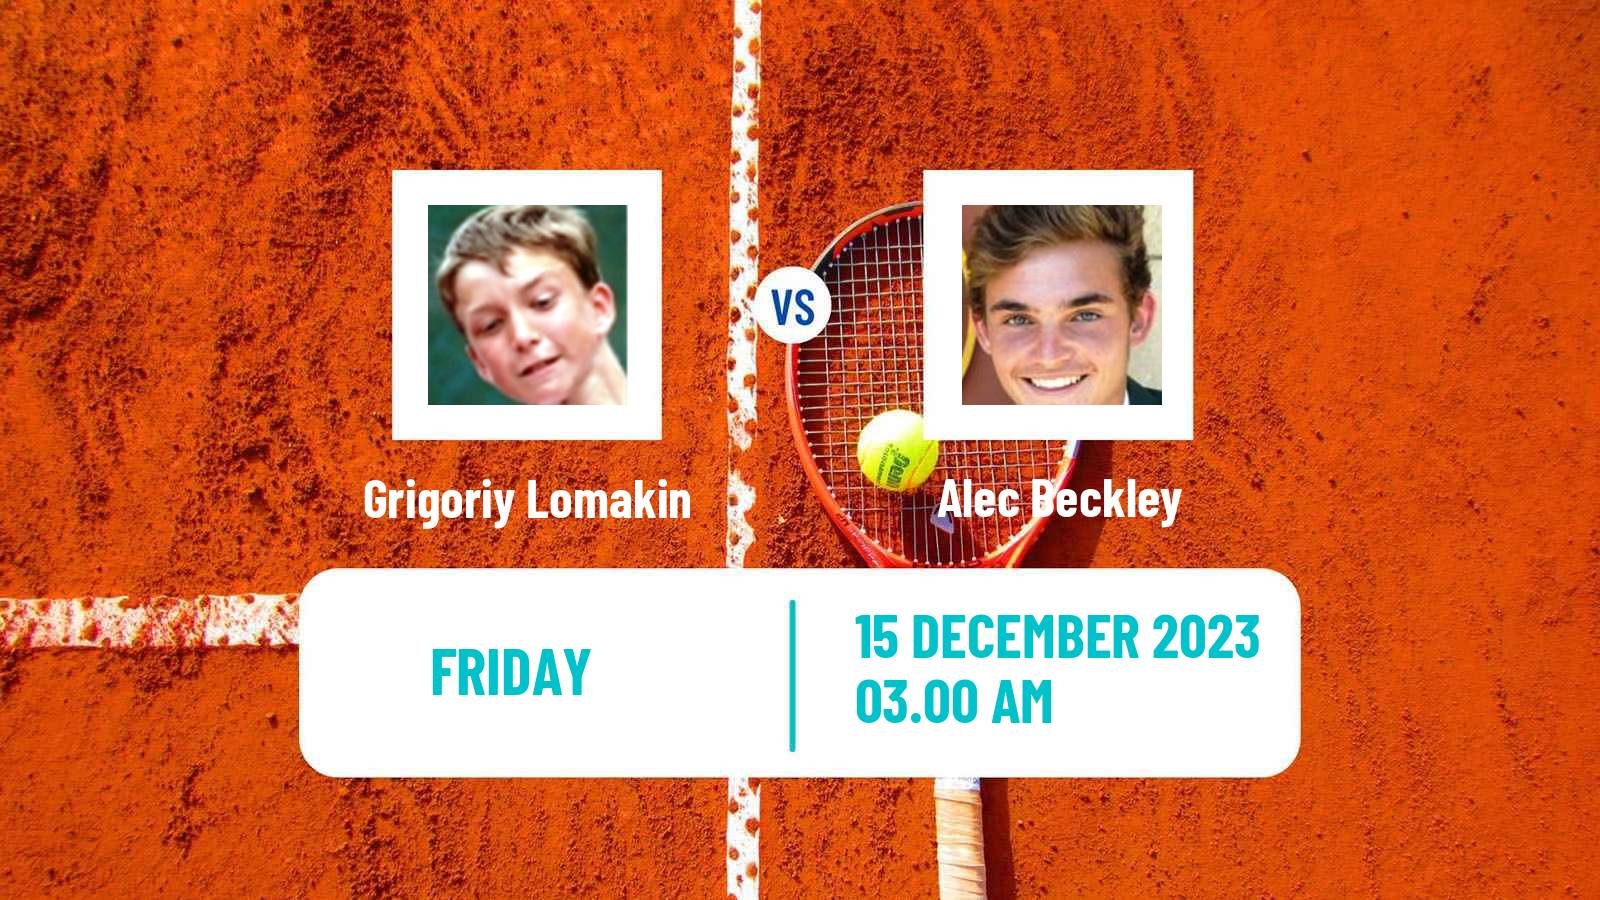 Tennis ITF M15 Sharm Elsheikh 20 Men Grigoriy Lomakin - Alec Beckley